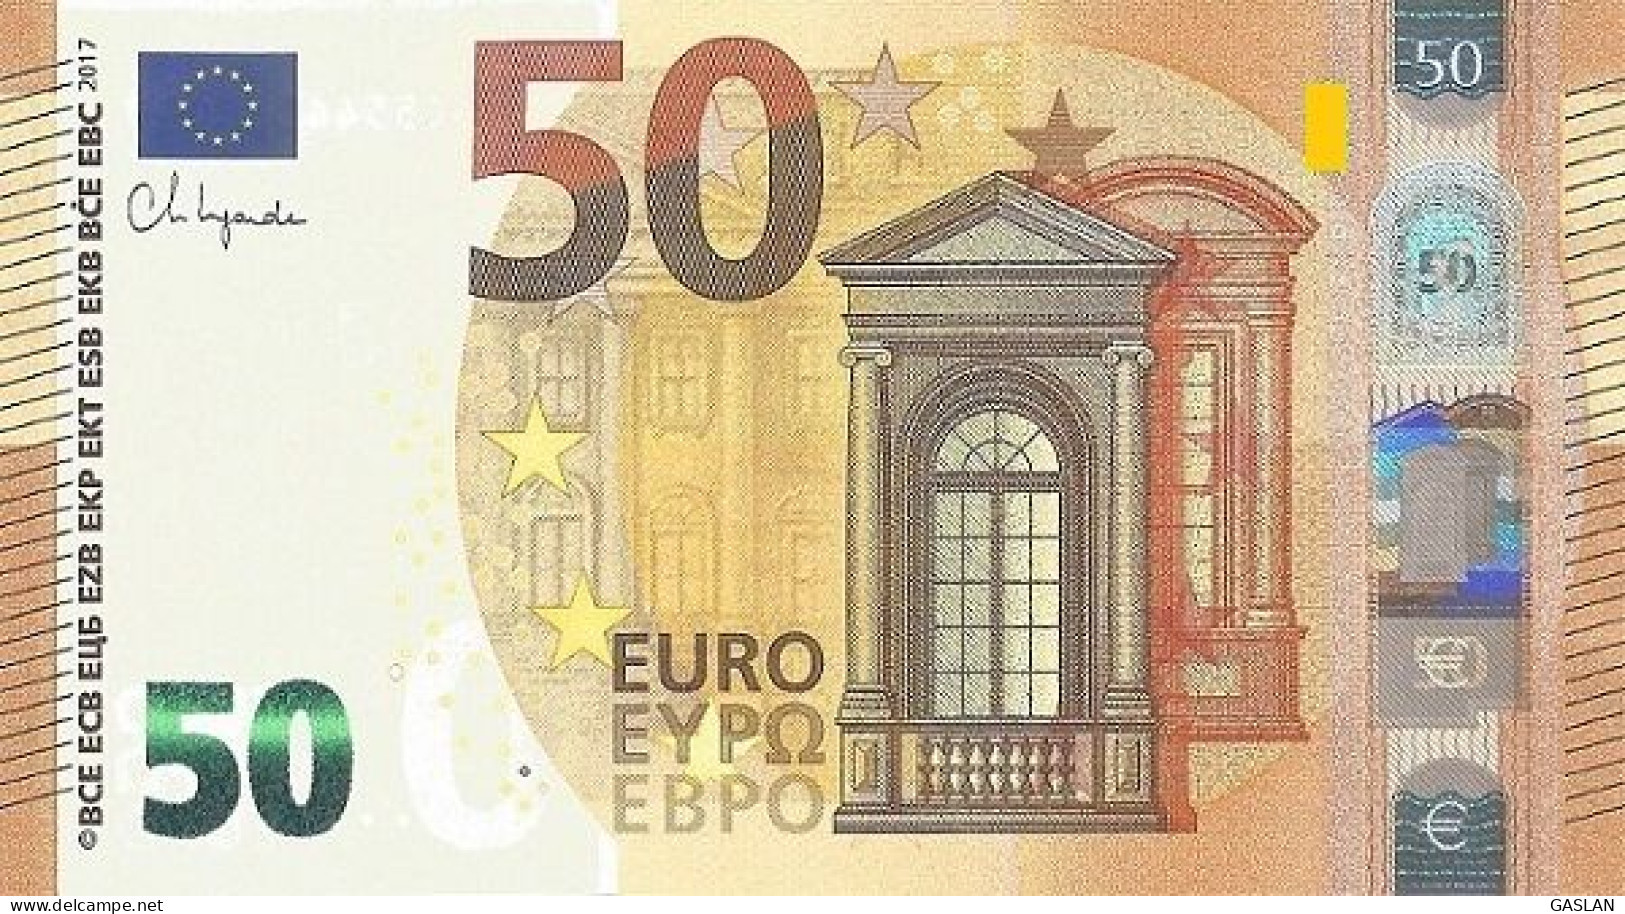 SPAIN 50 VD V031 UNC LAGARDE - 50 Euro